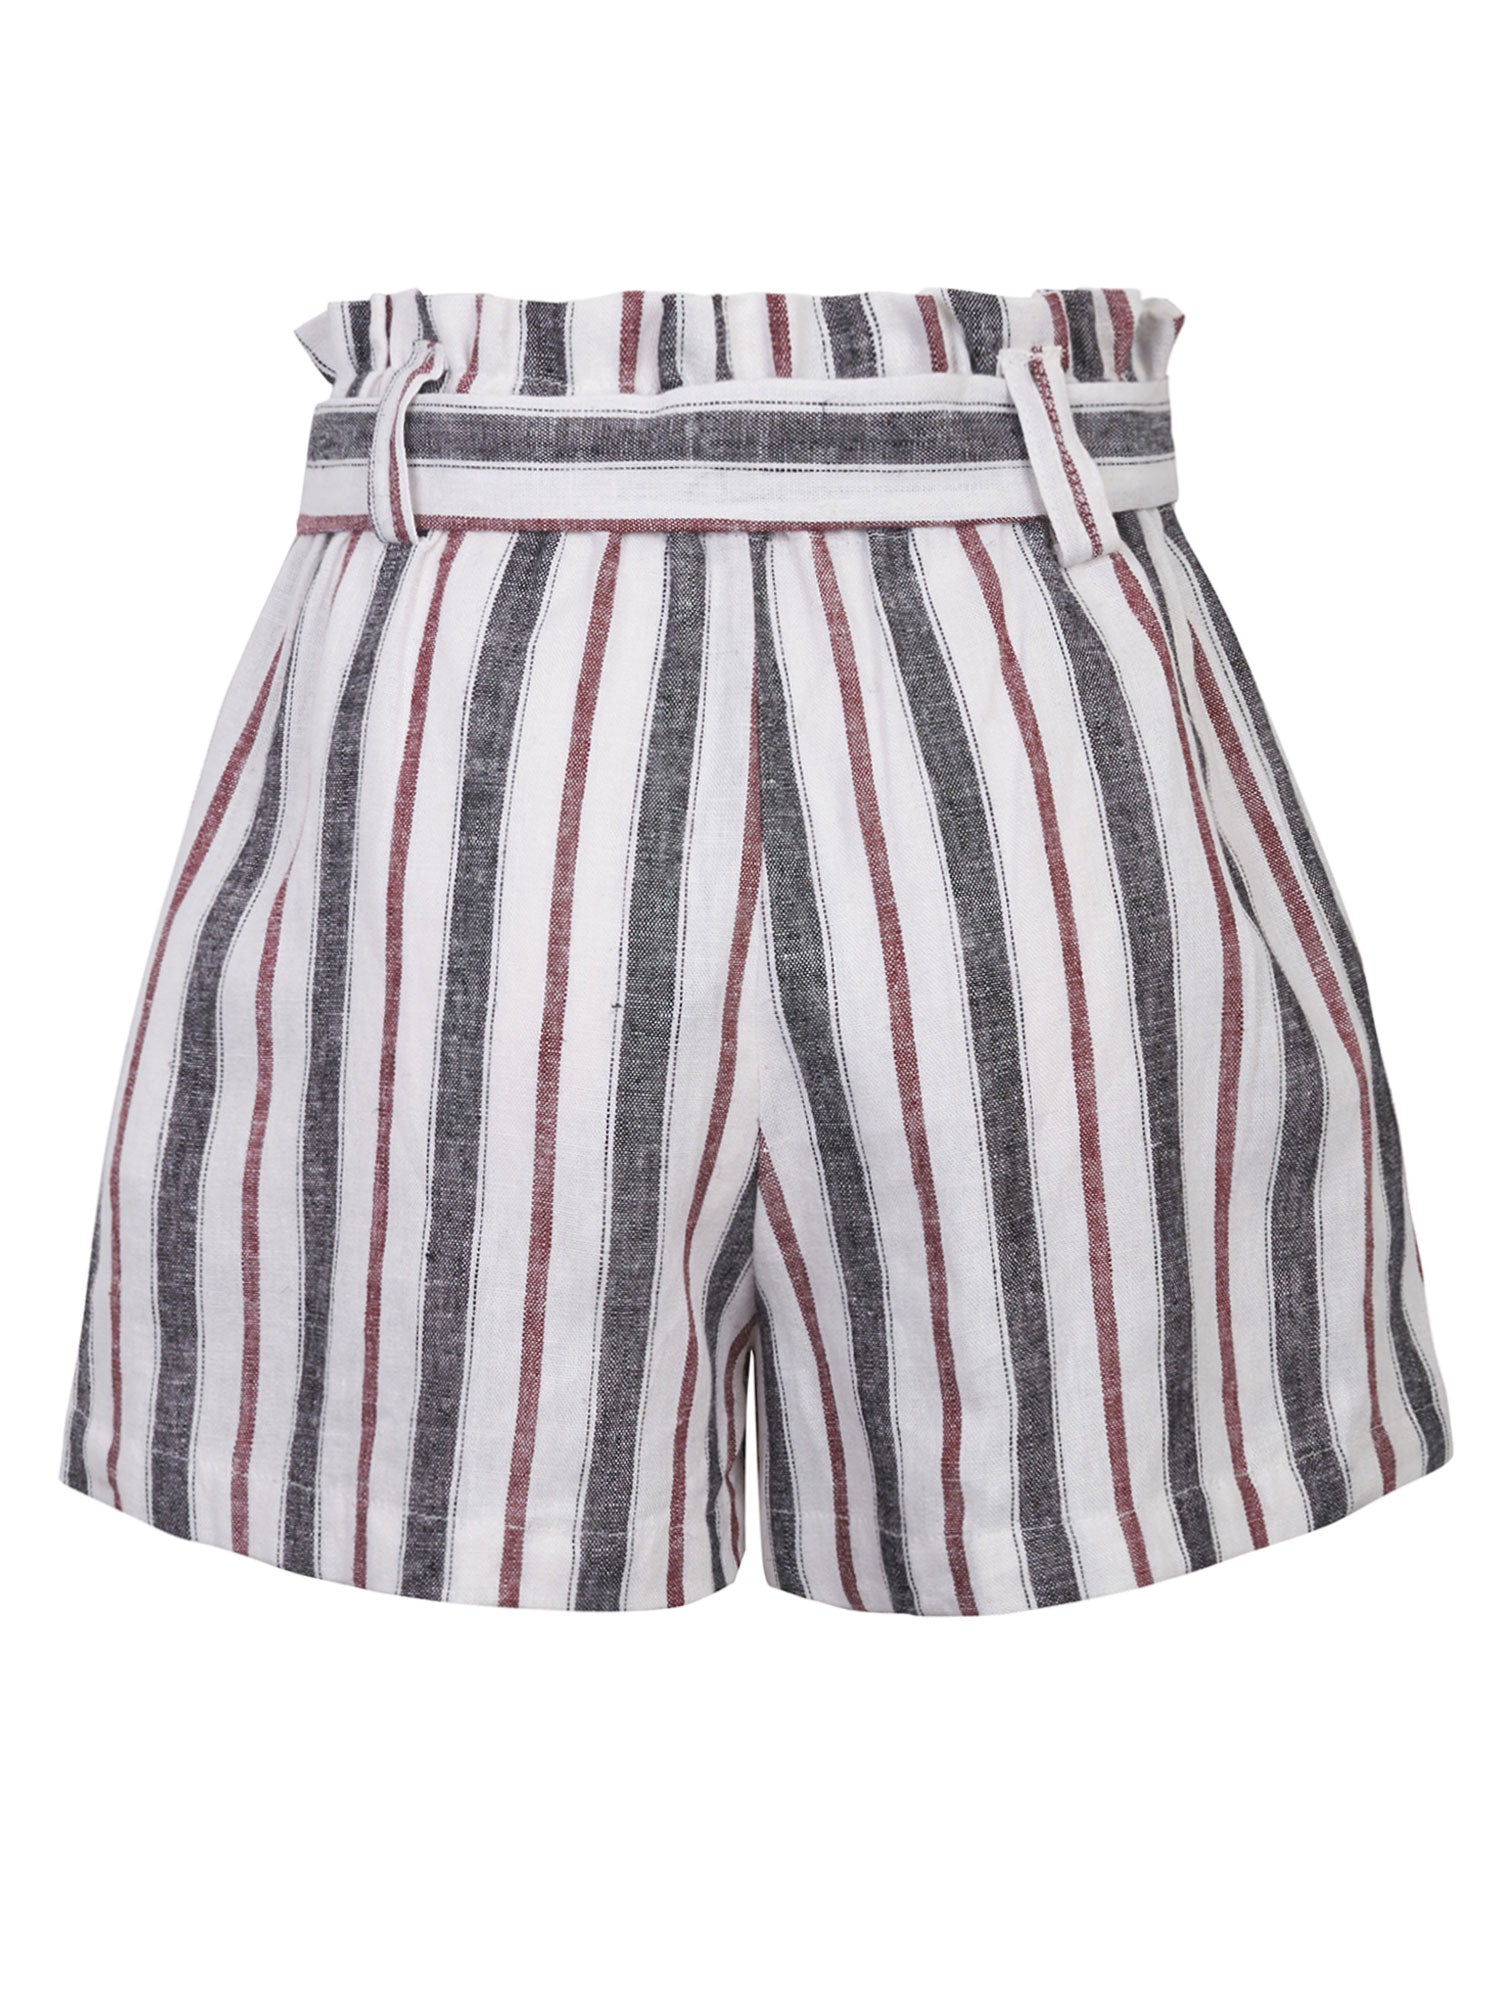 KOGMO Women's Casual Multi Color Striped Summer Beach Linen Shorts Wit